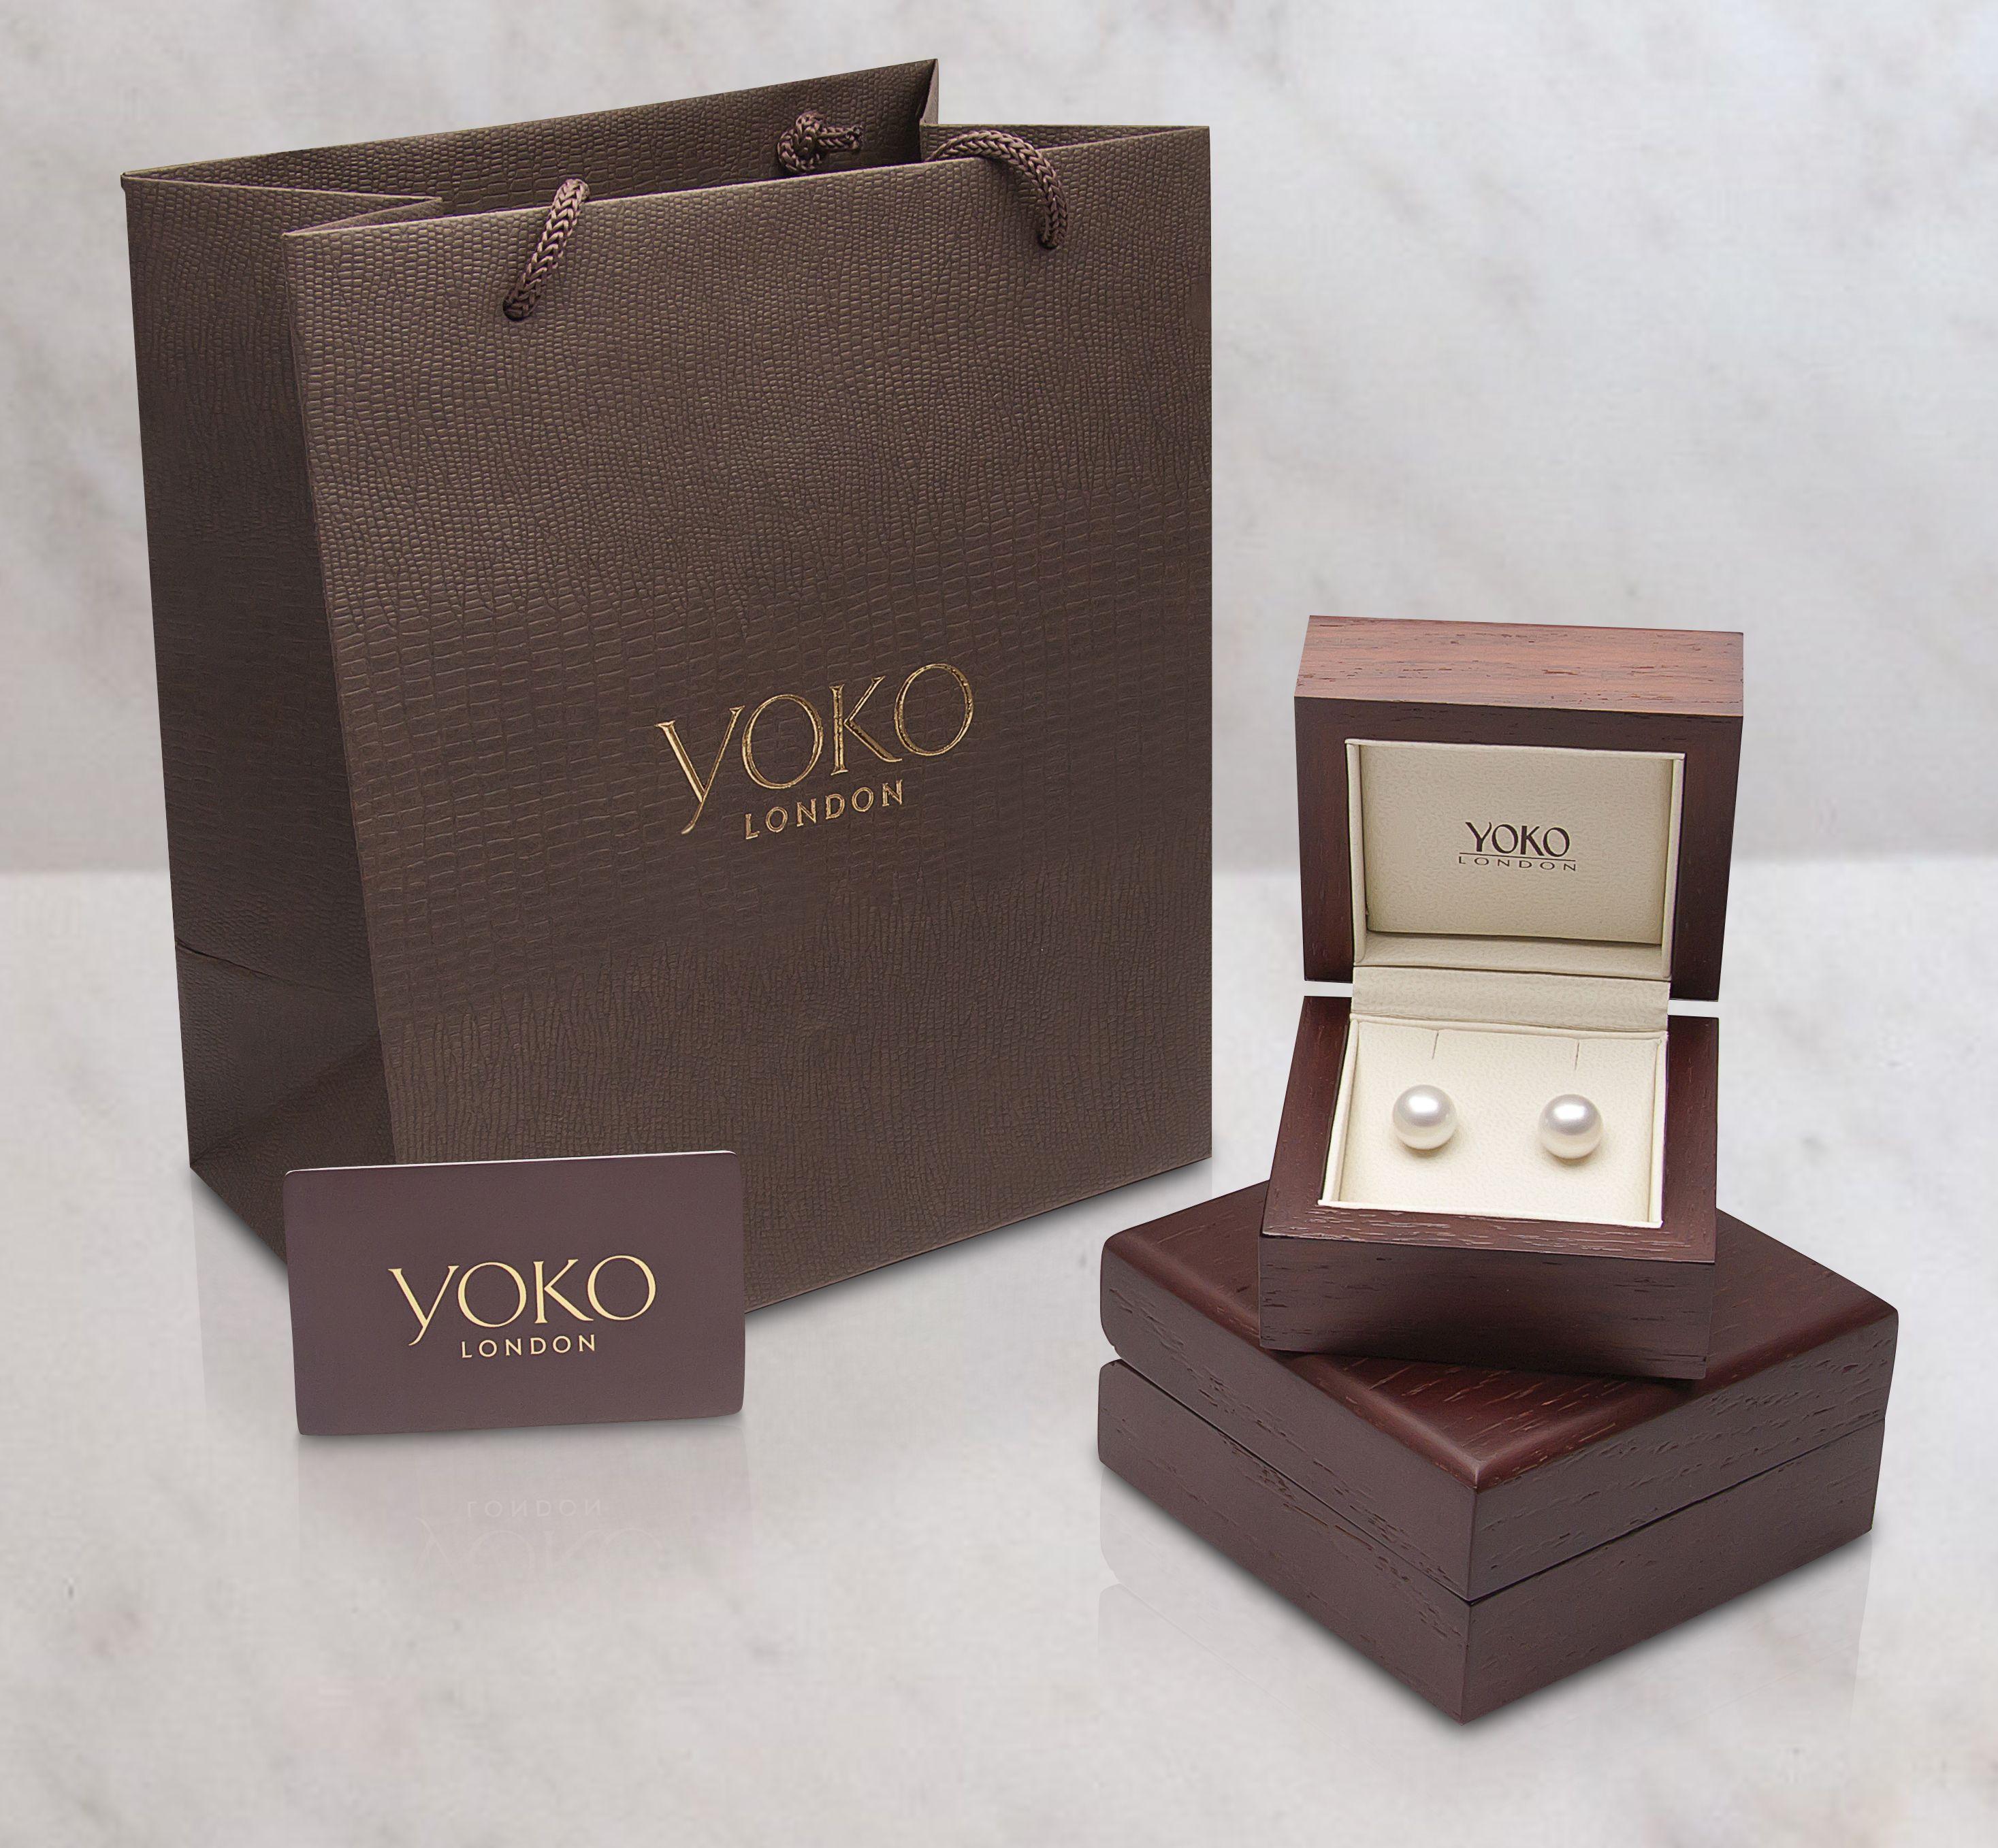 Yoko London Tahitian Pearl and Diamond Earrings, in 18 Karat White Gold 3